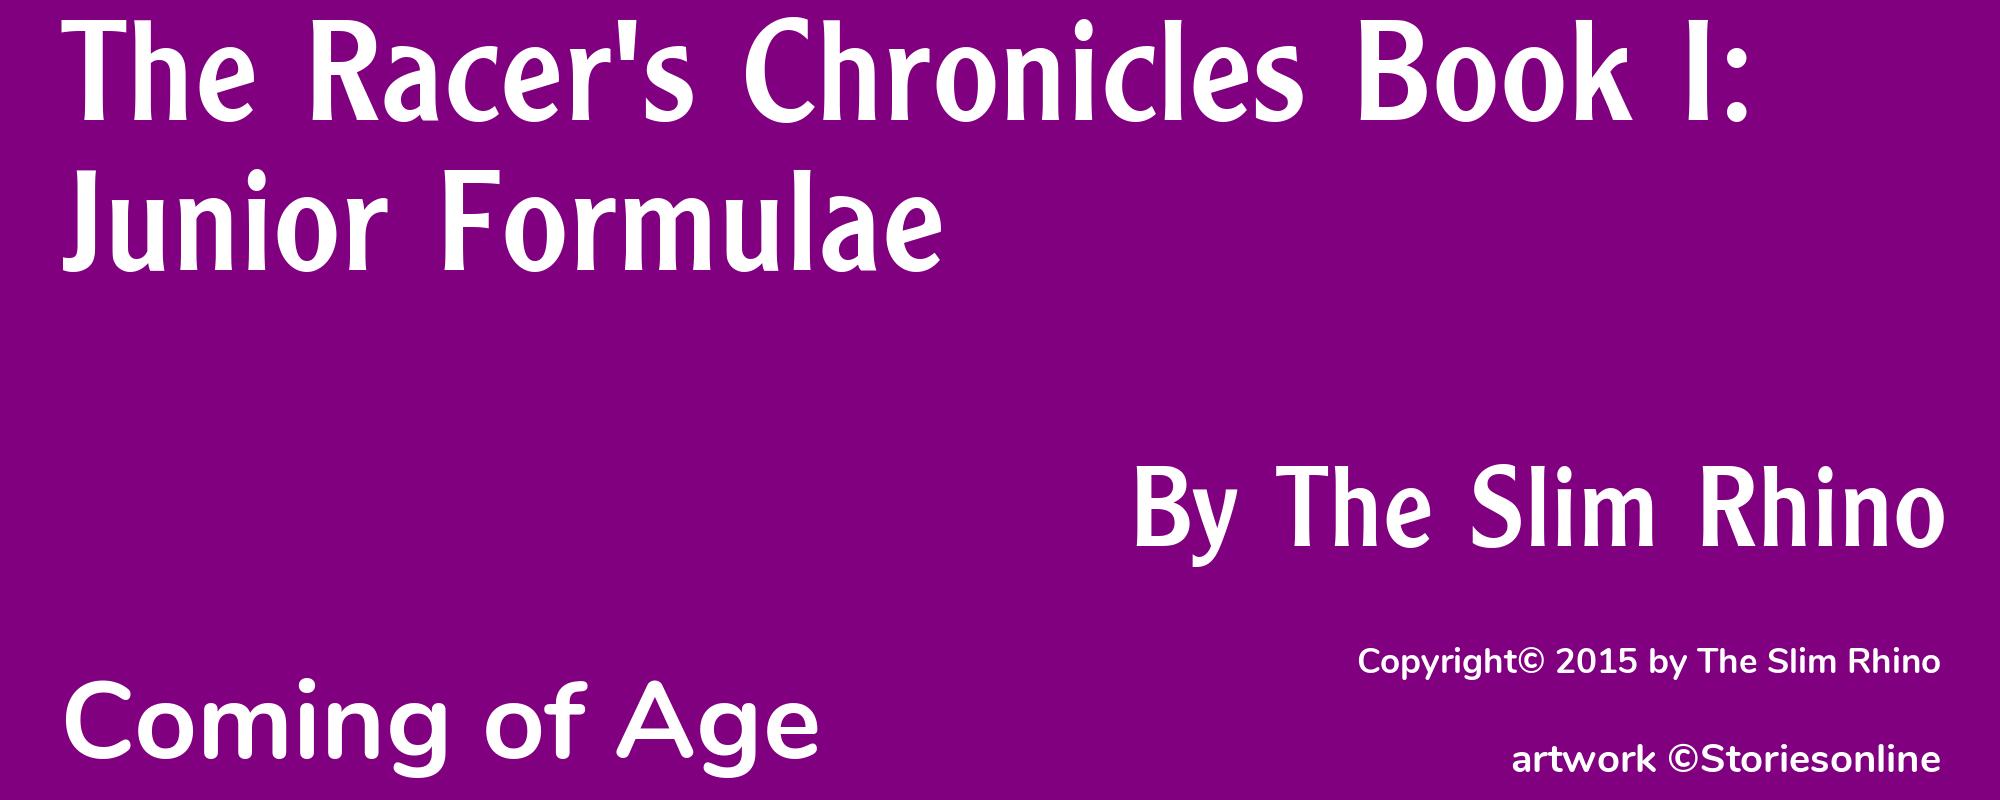 The Racer's Chronicles Book I: Junior Formulae - Cover